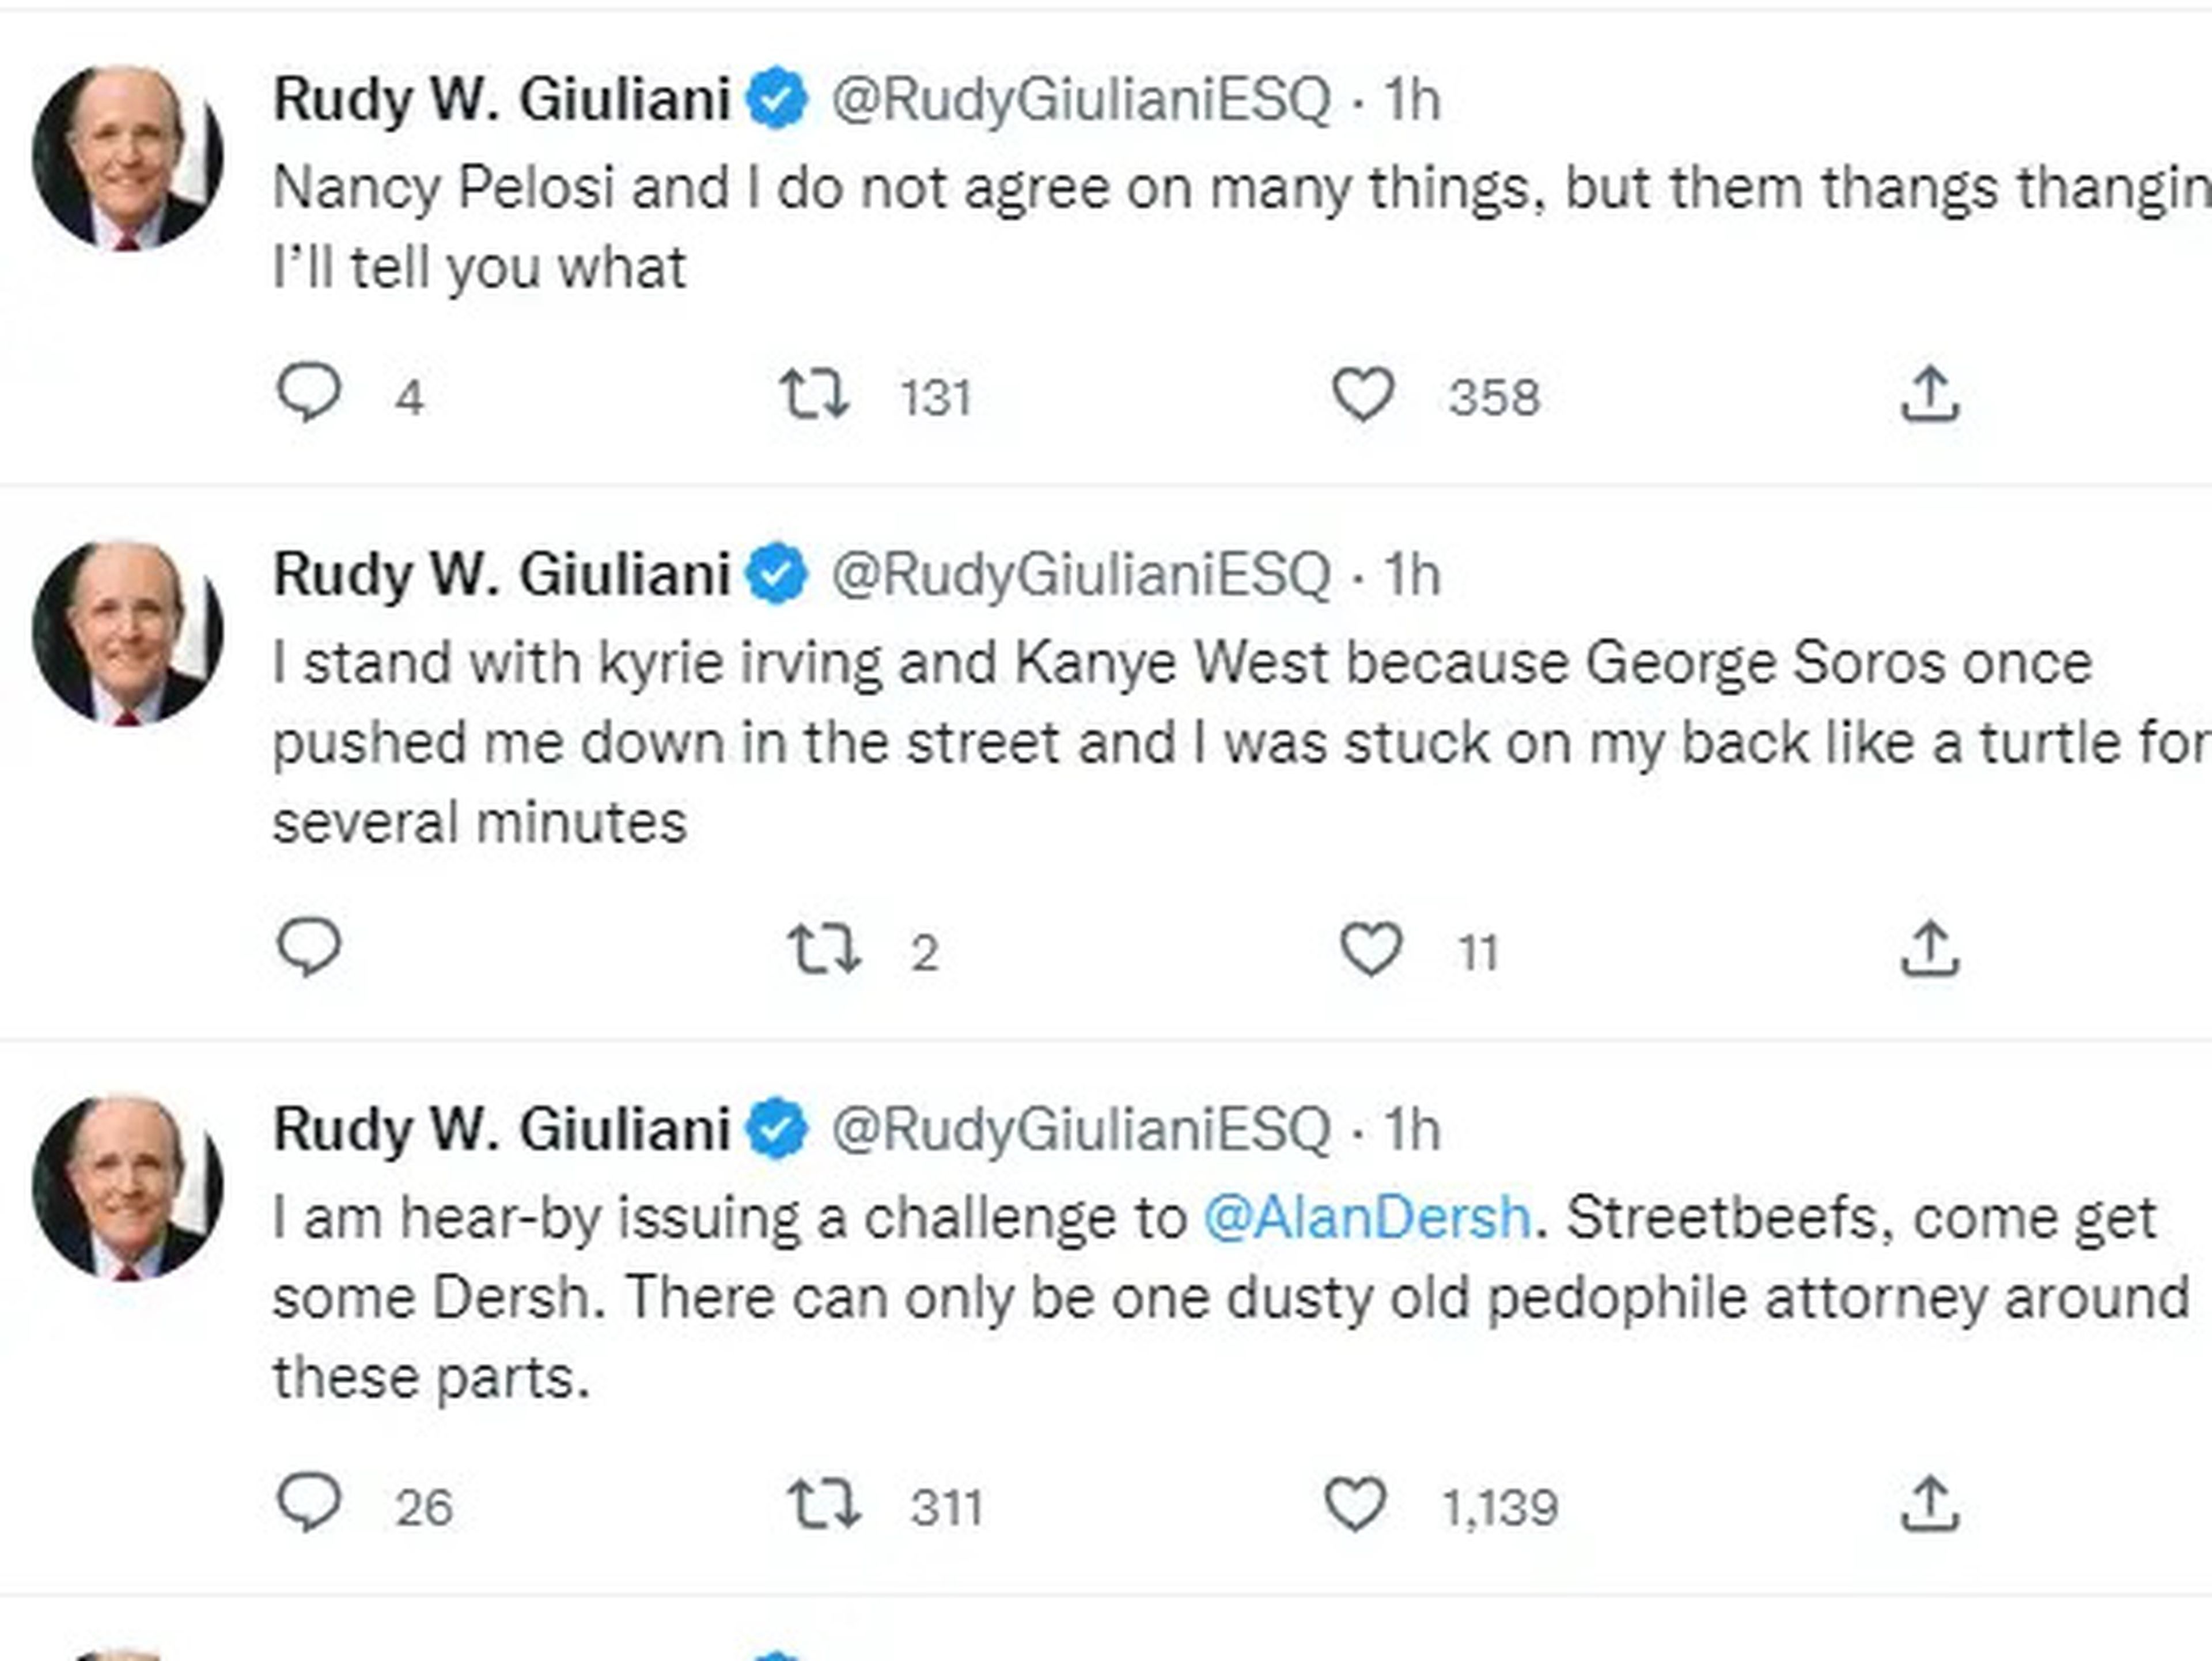 Thread of tweets from Rudy Giuliani impersonator